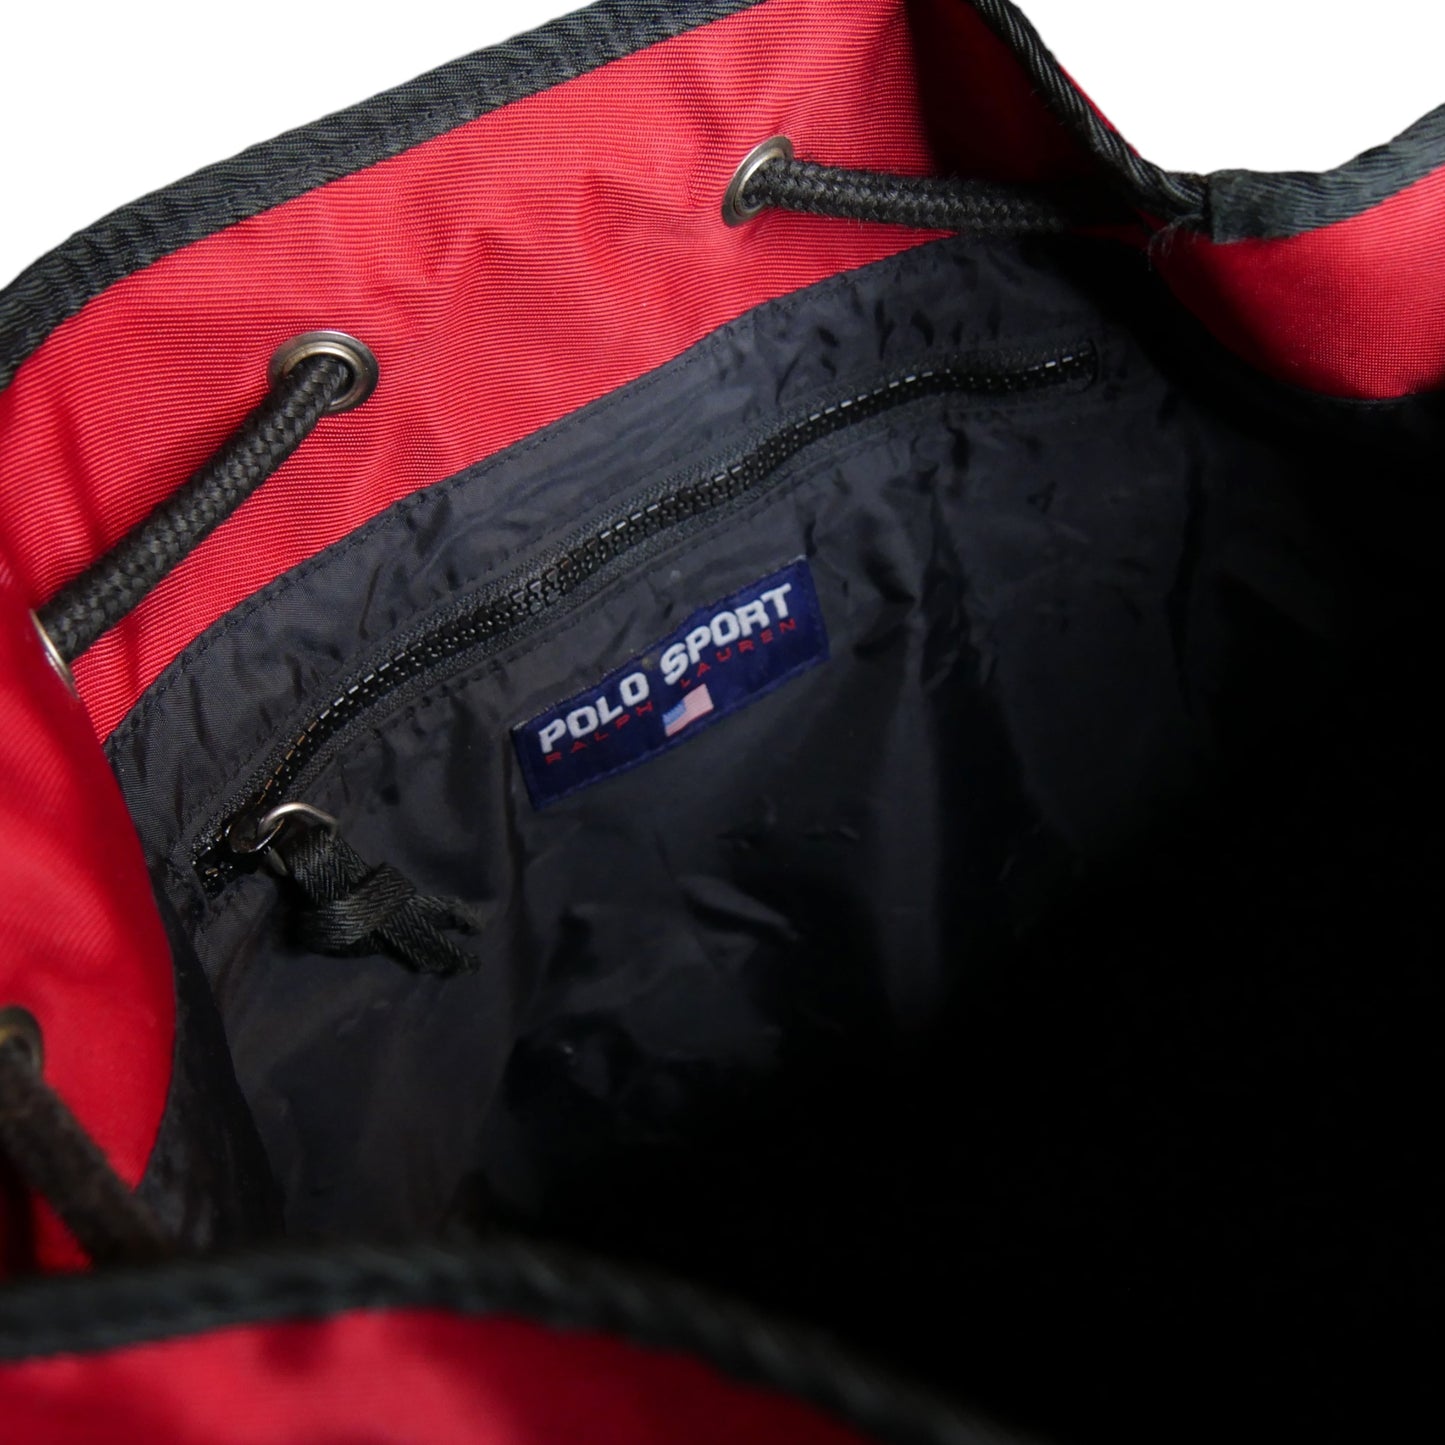 Polo Sport Single Strap Bag